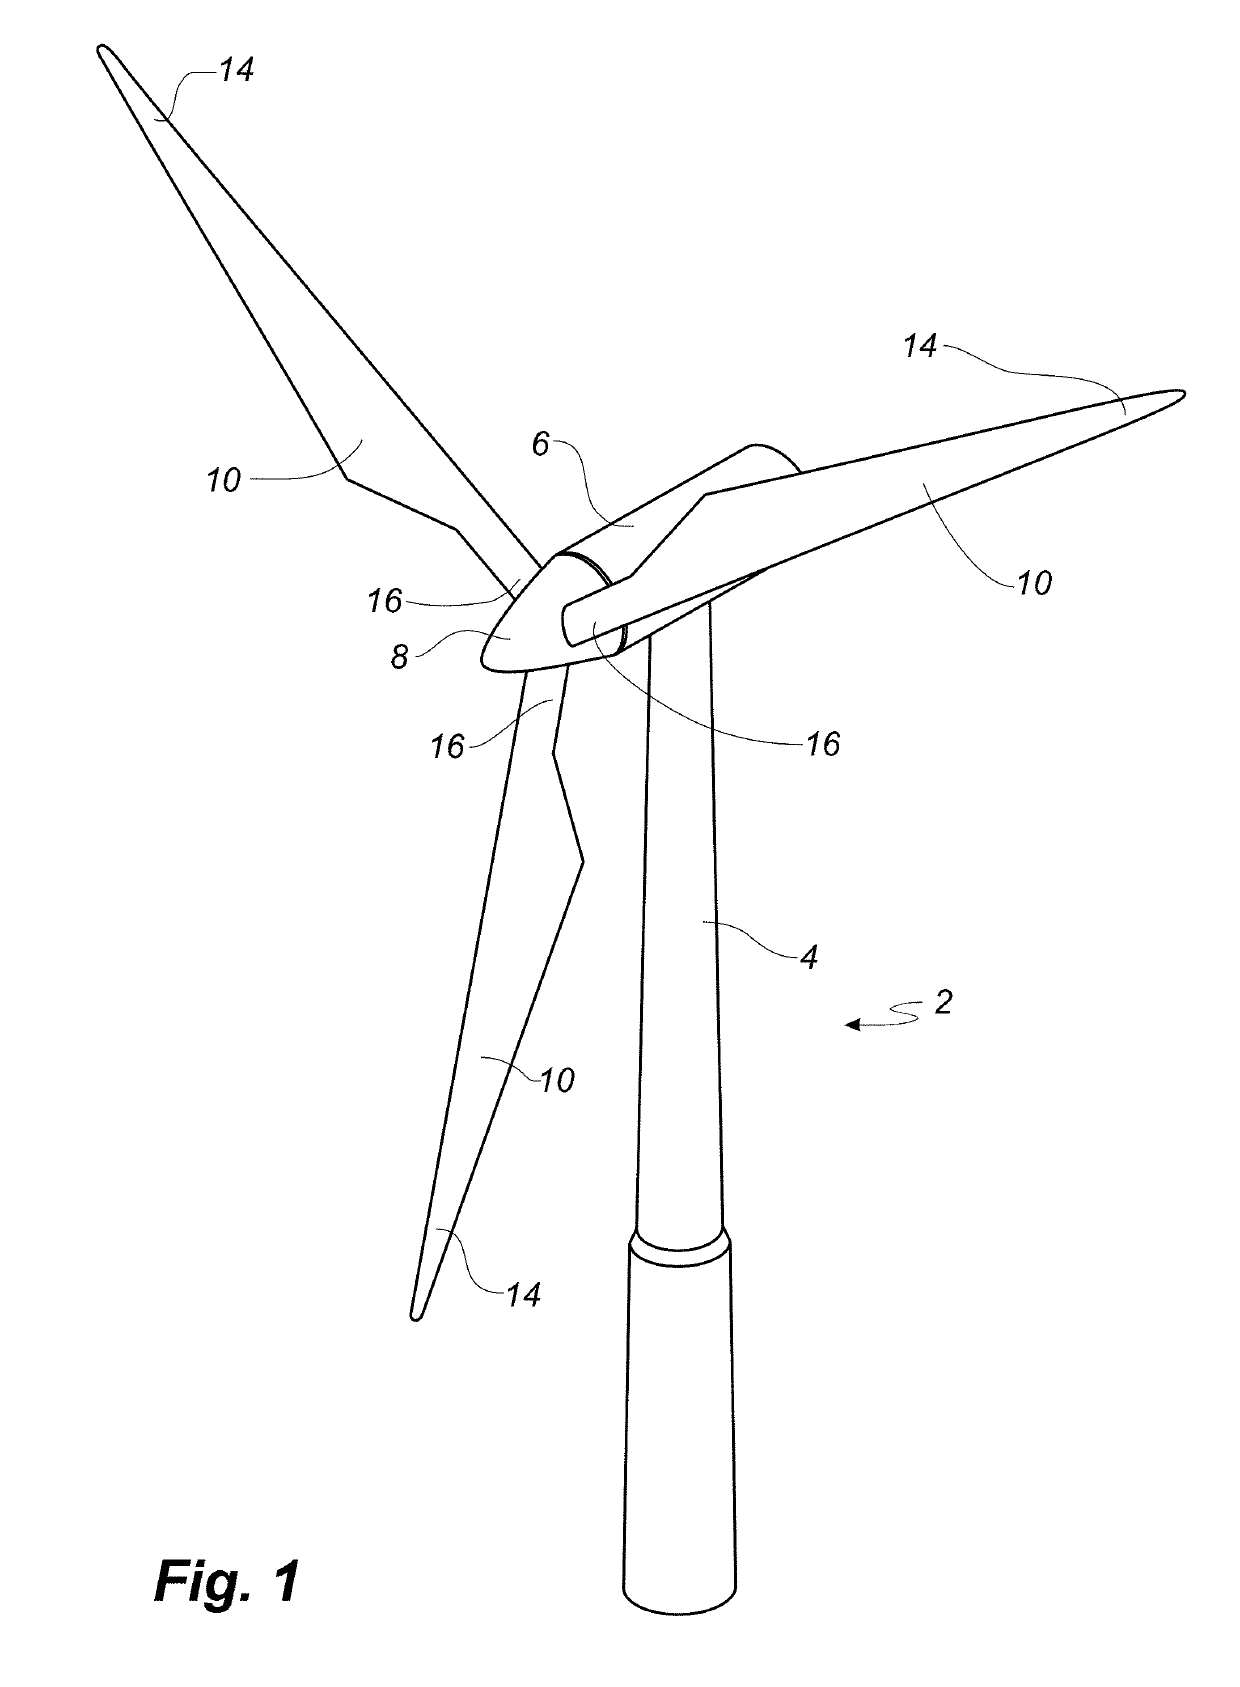 Modular system for transporting wind turbine blades